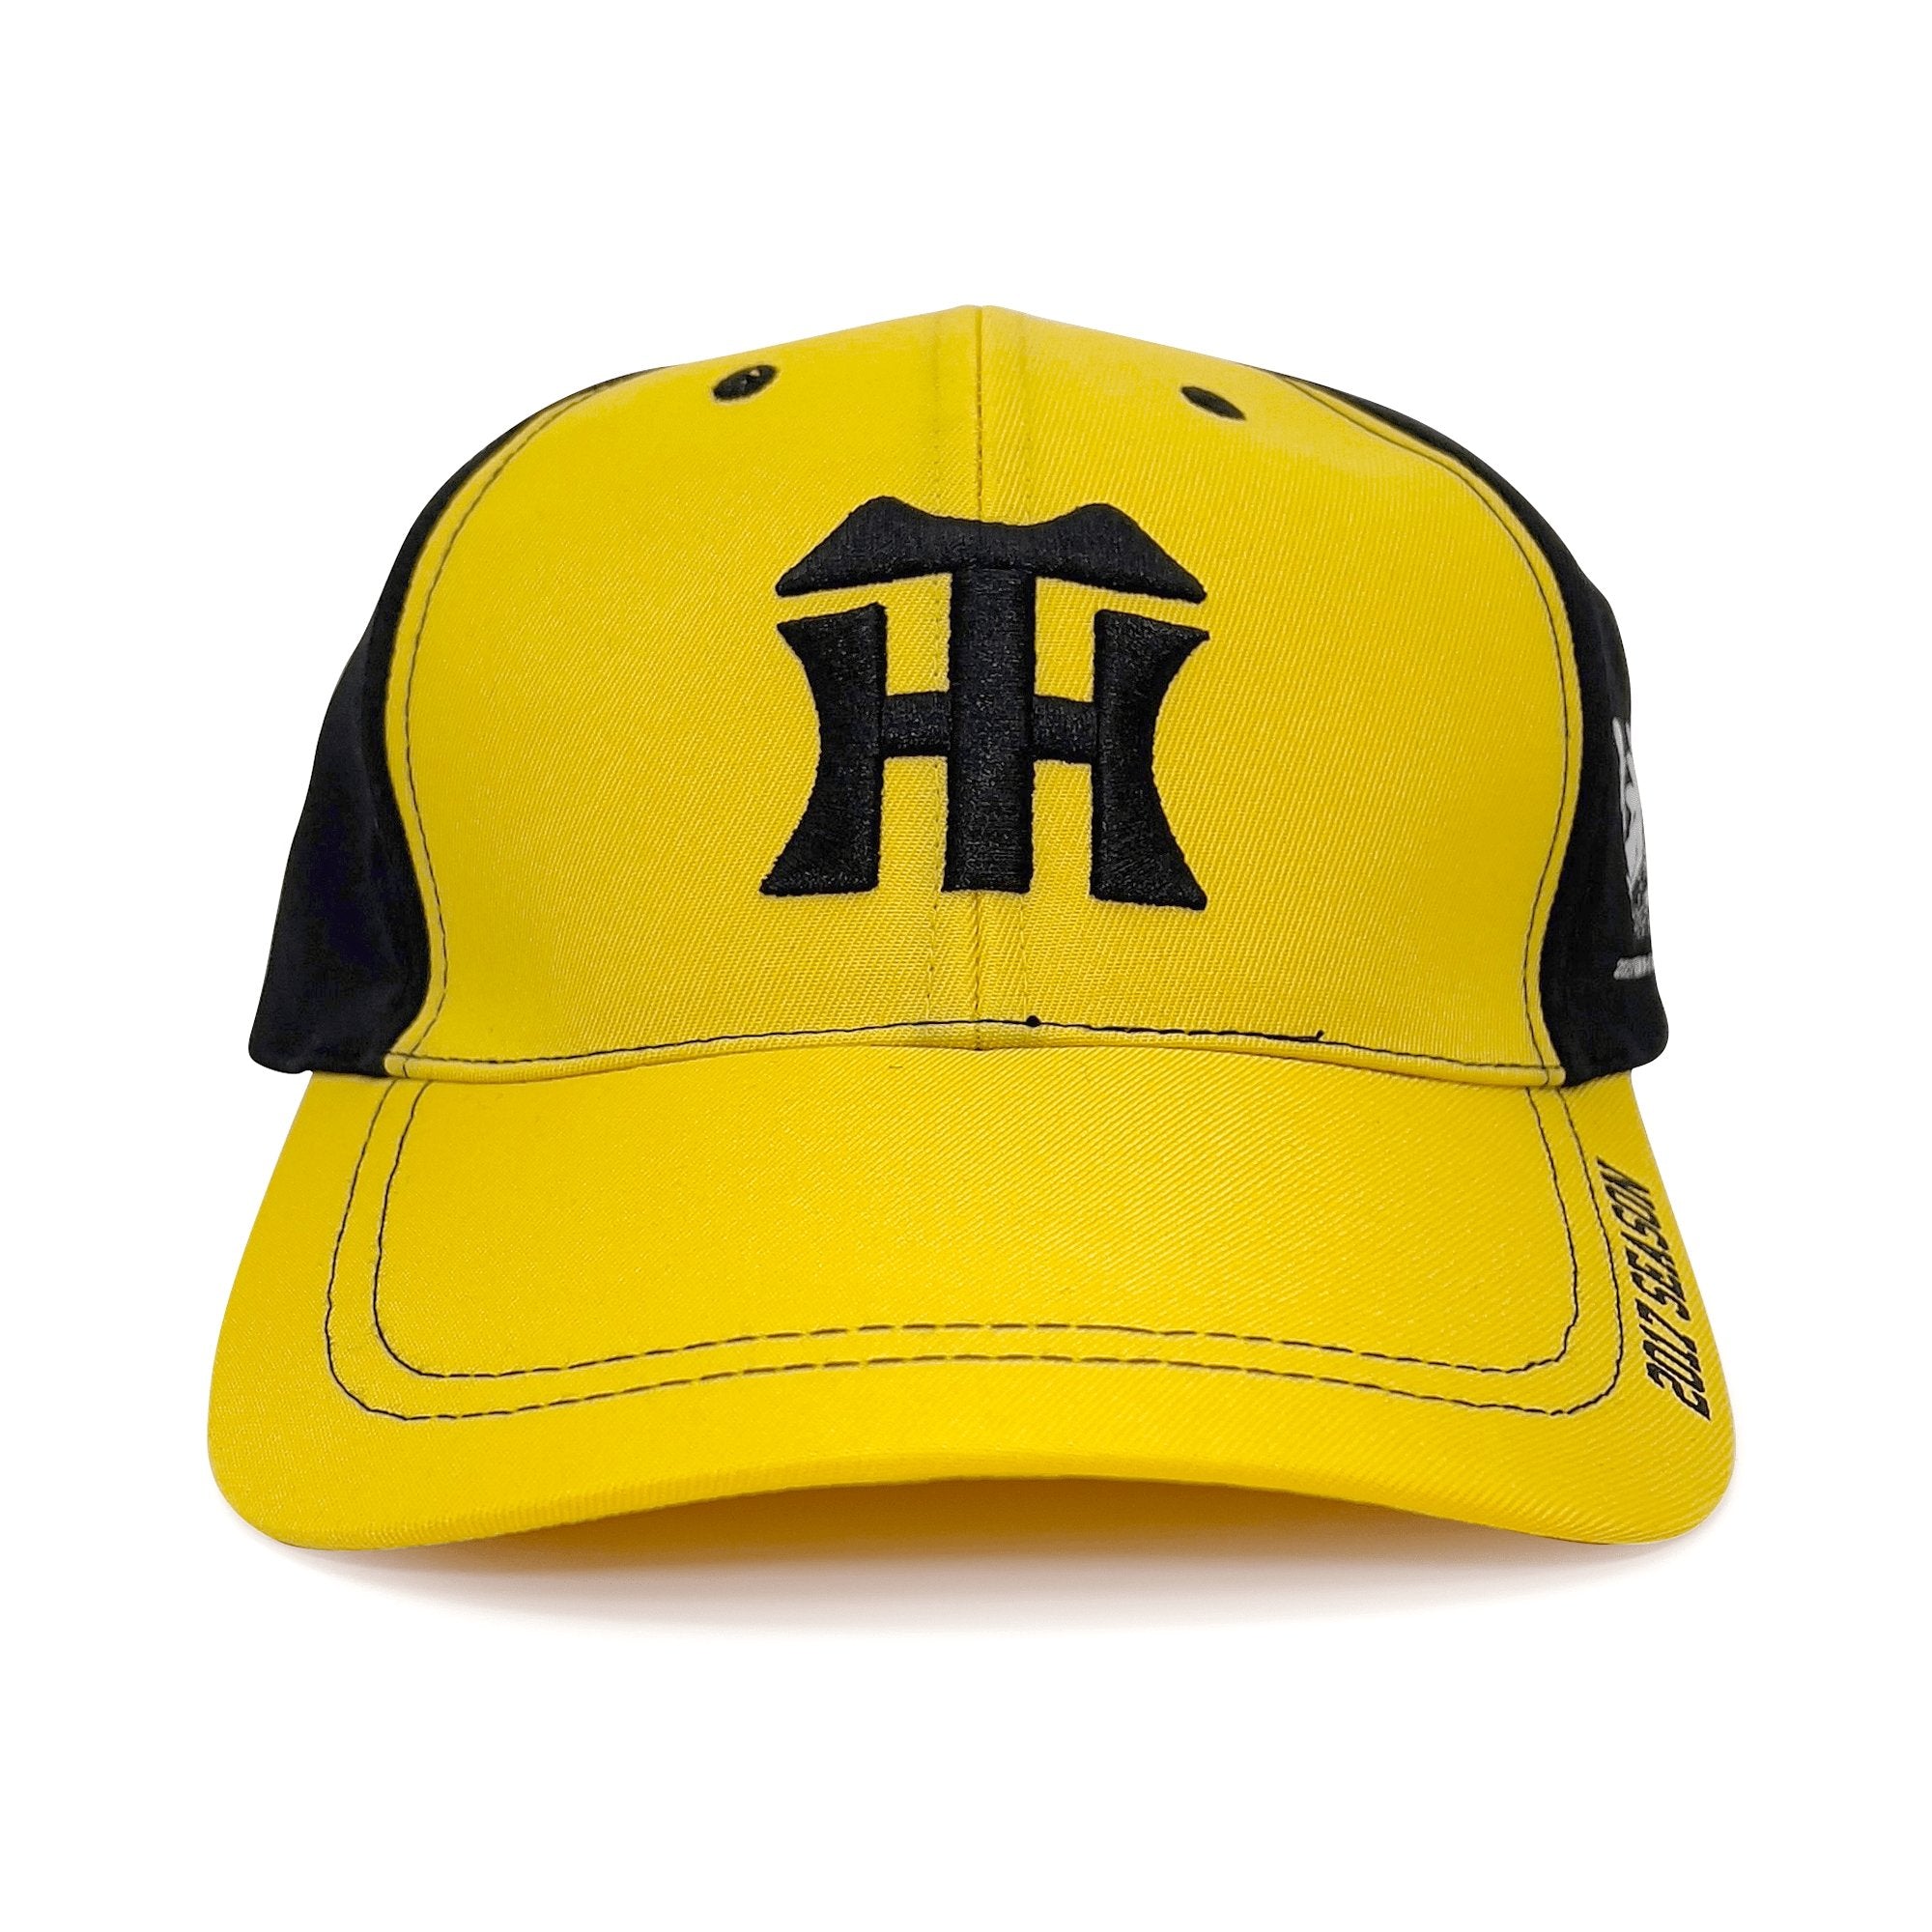 Limited Edition Japan Hanshin Tigers Hat Cap 2017 Season Yellow